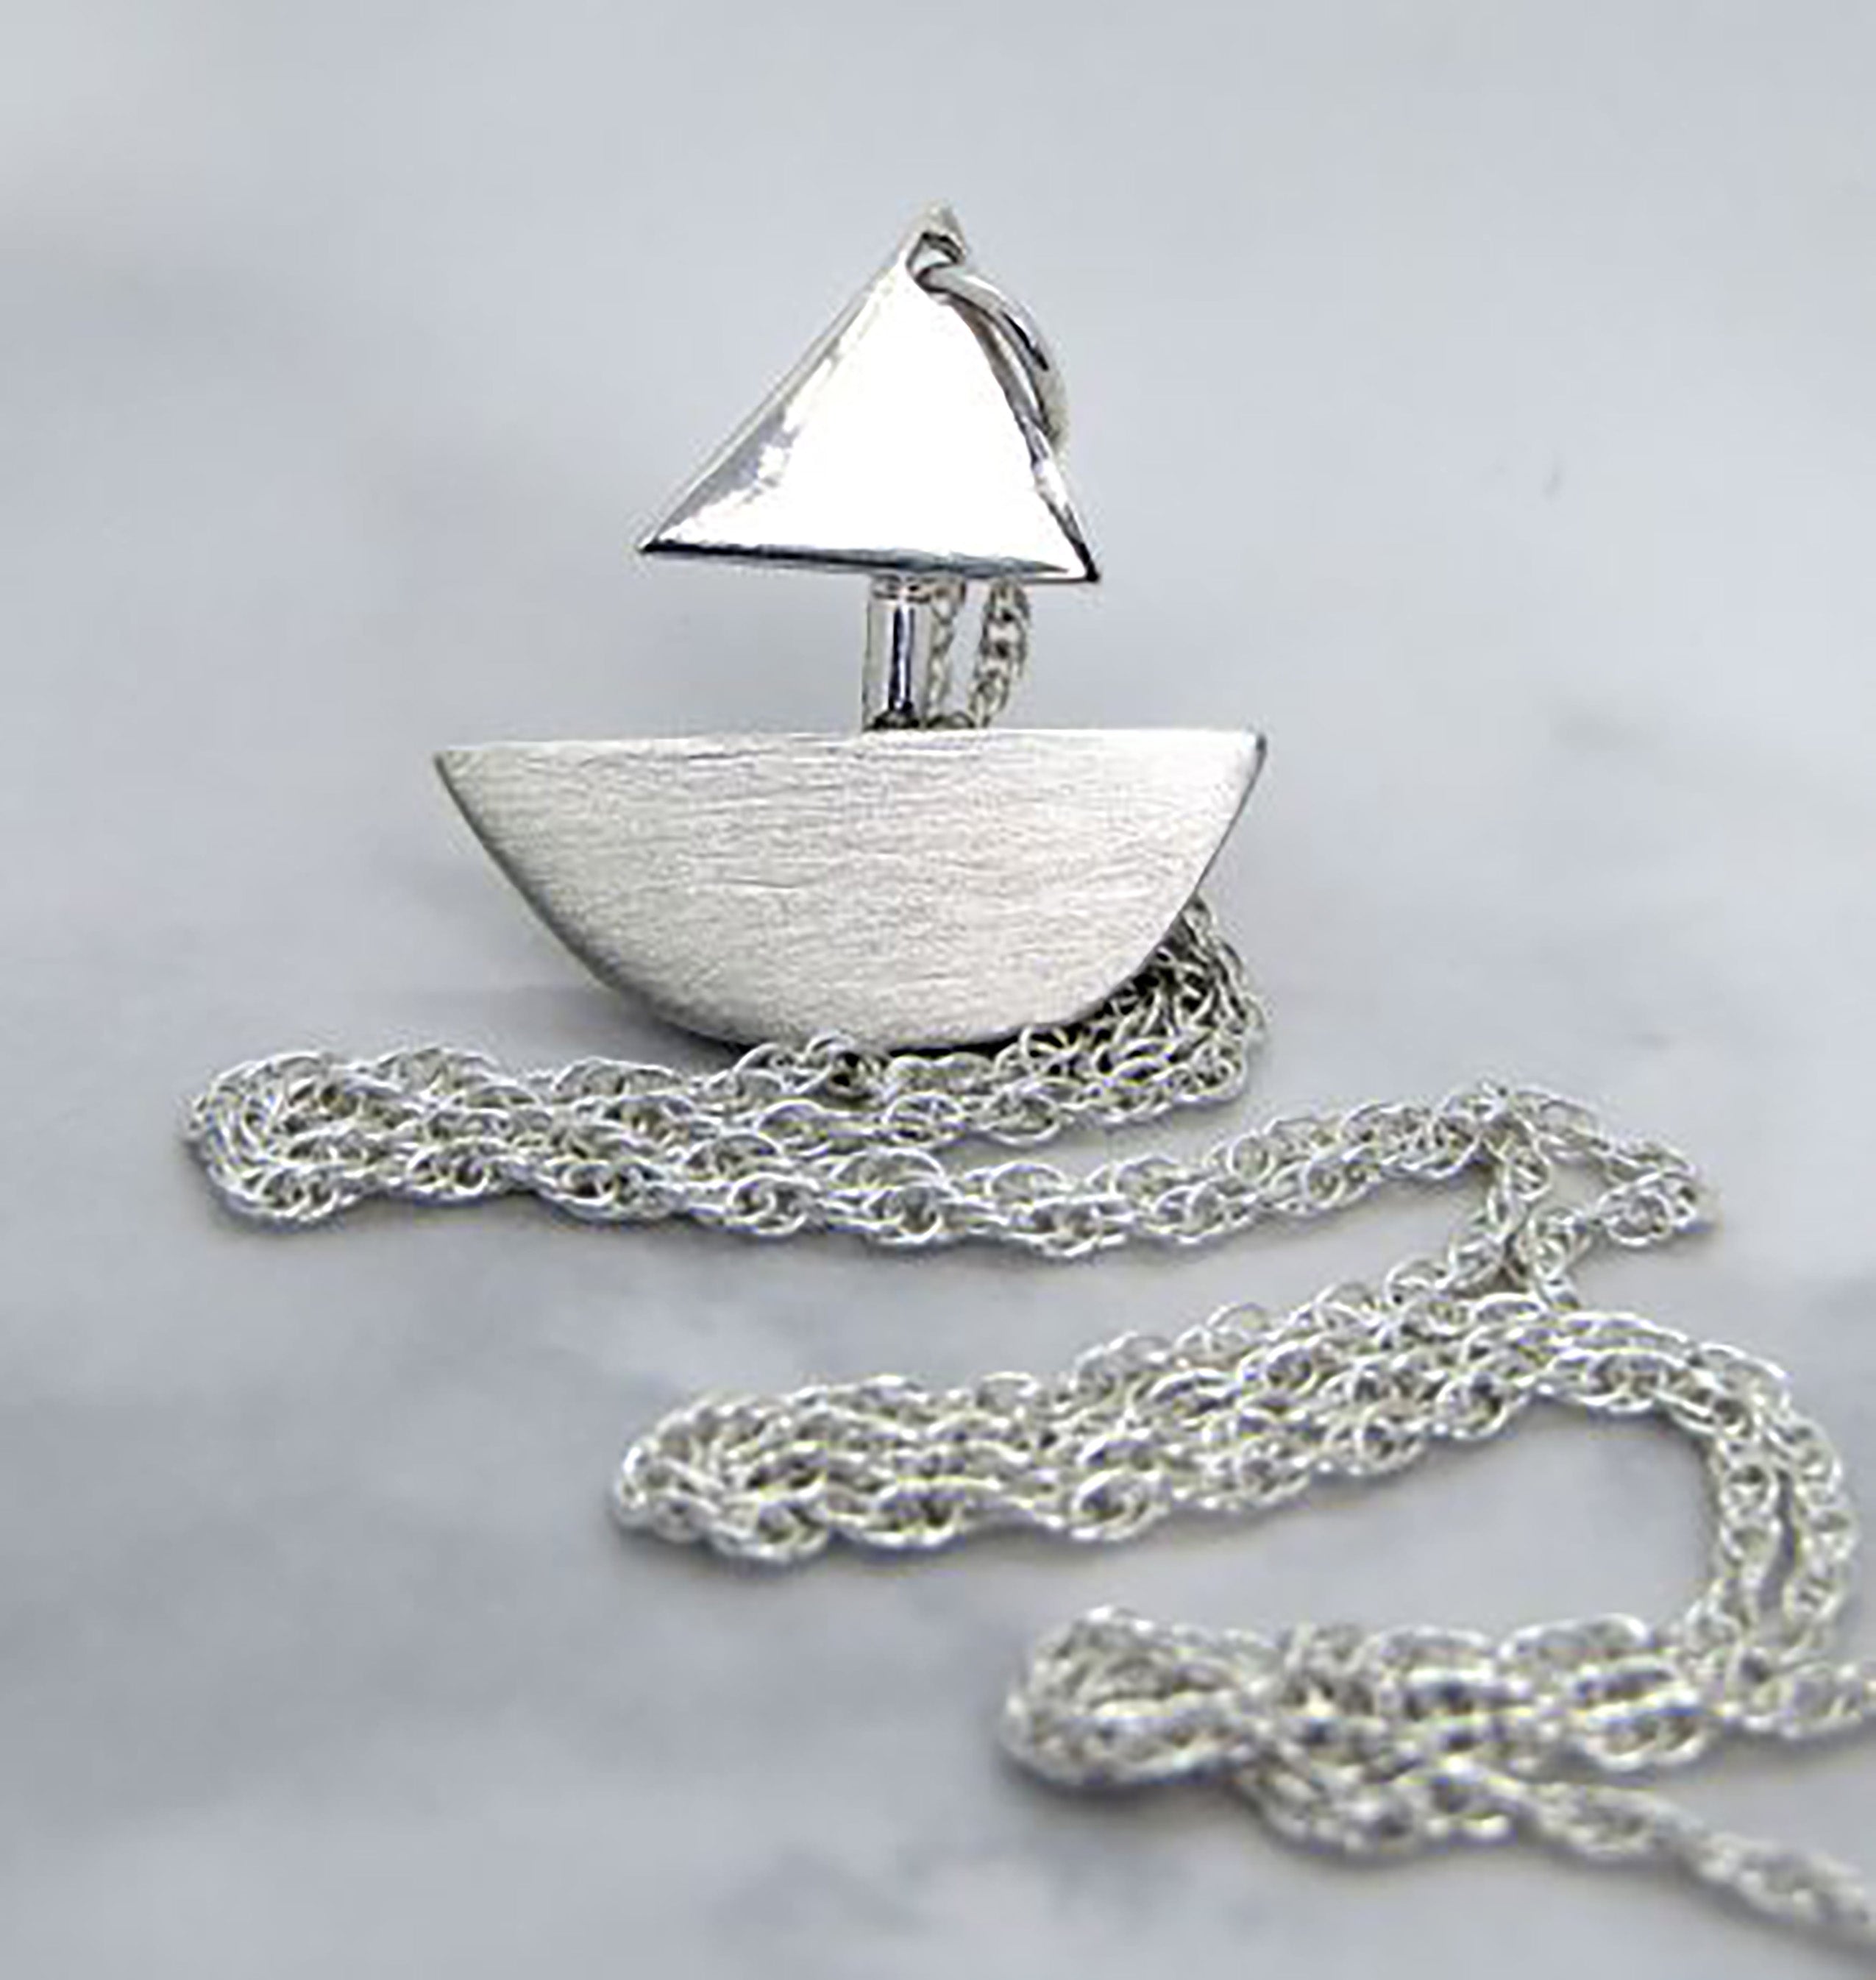 Sail Away - pendant - silver - handmade